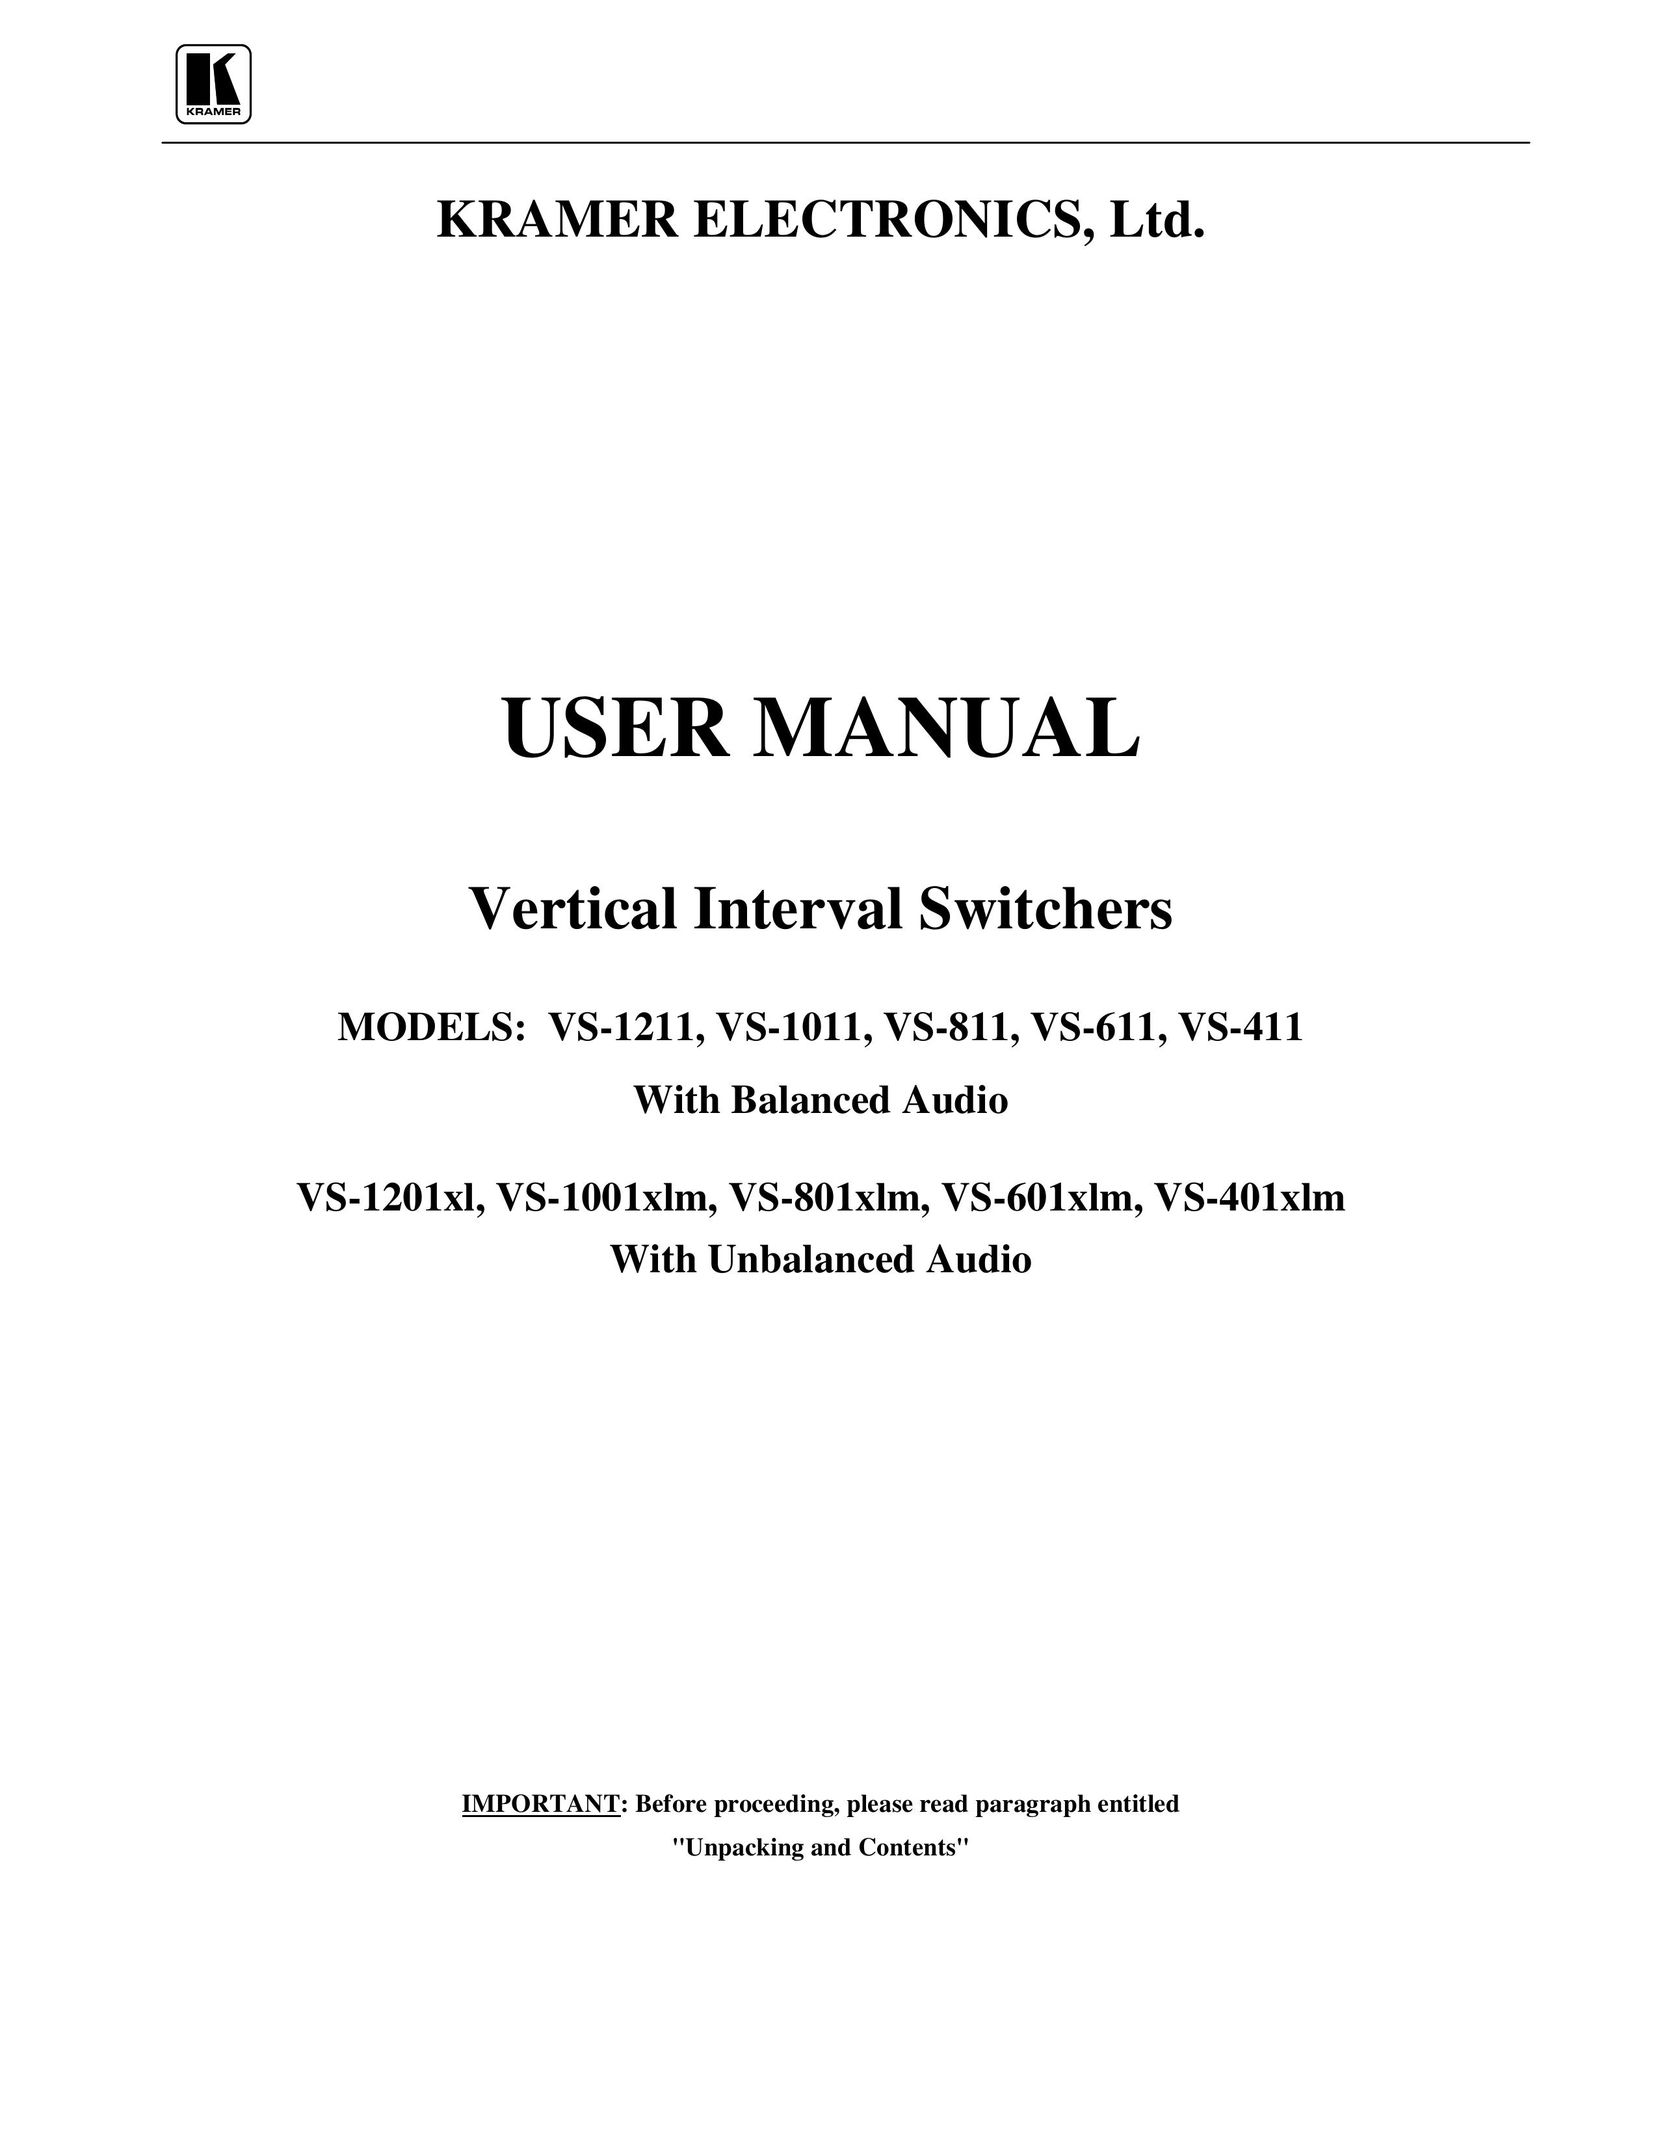 Kramer Electronics VS-1211 Switch User Manual